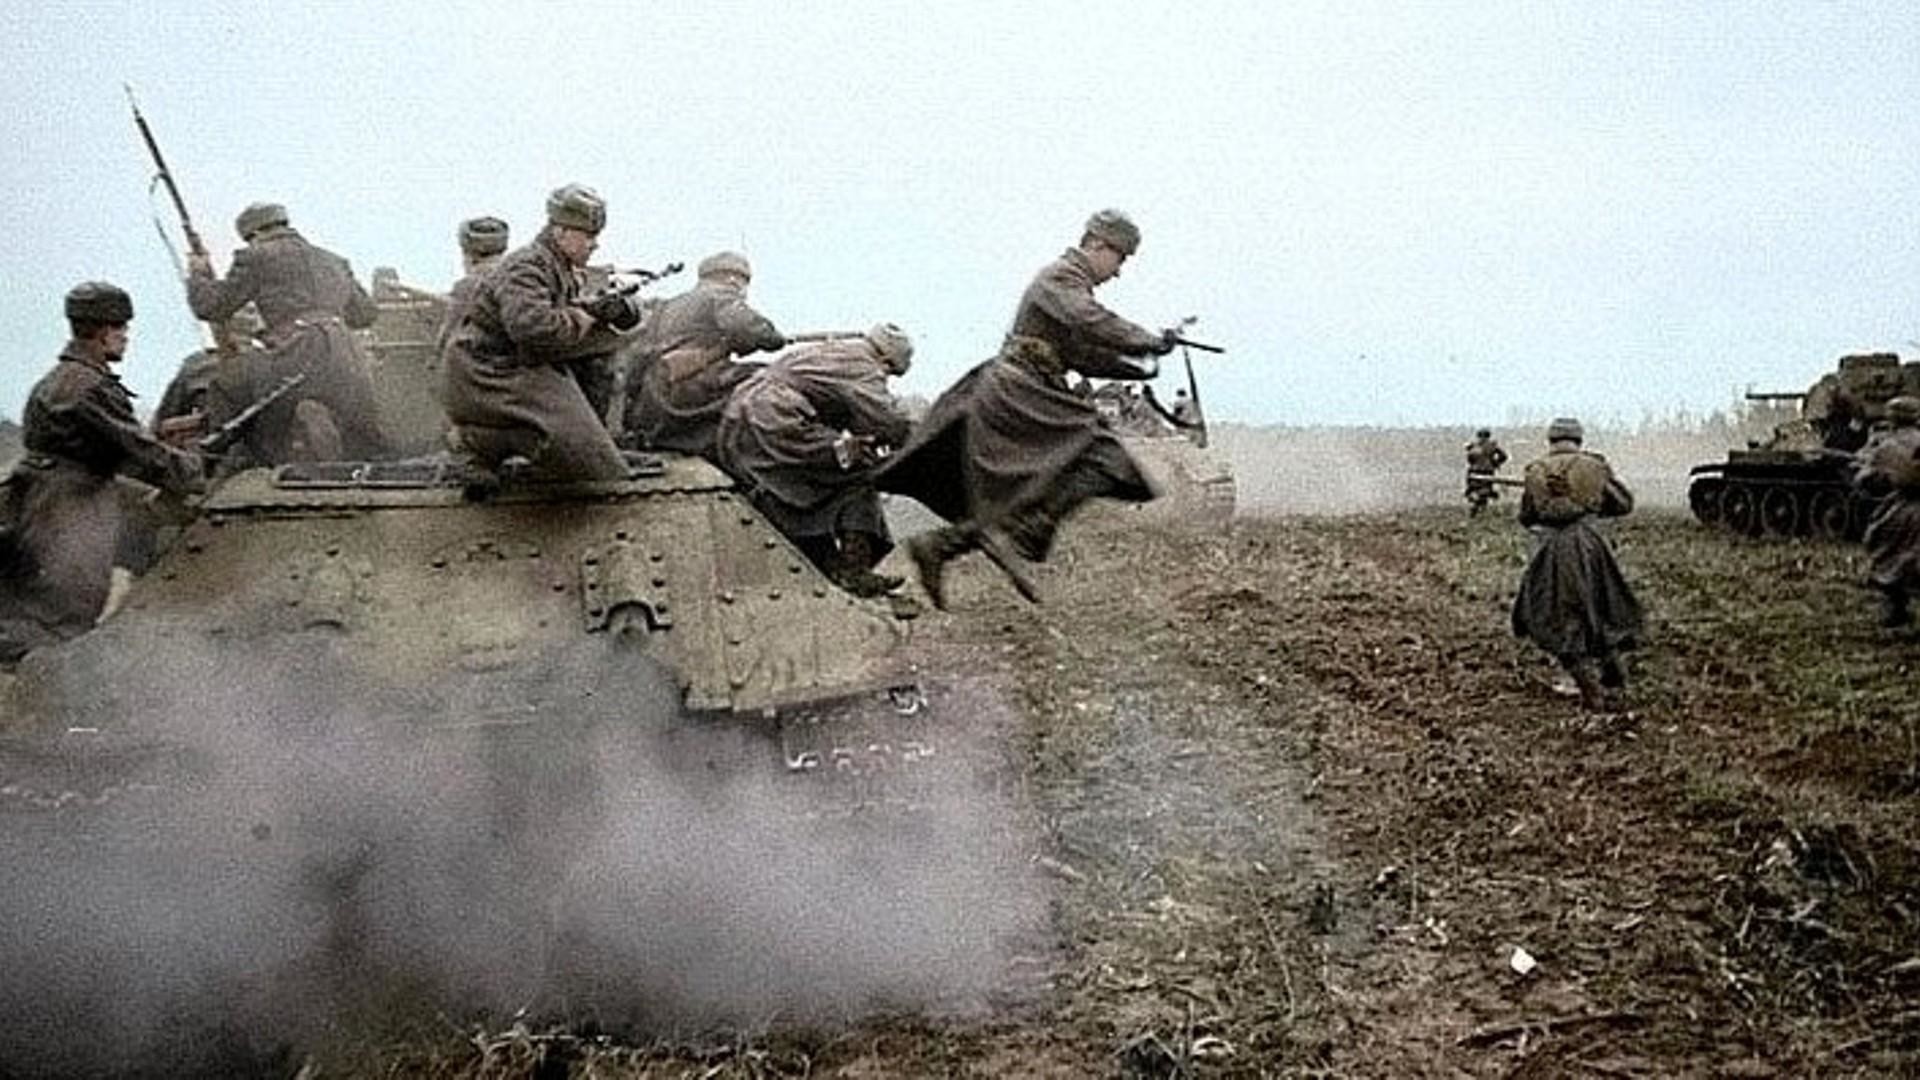 1920x1080 T34 Tank Riding Infantry